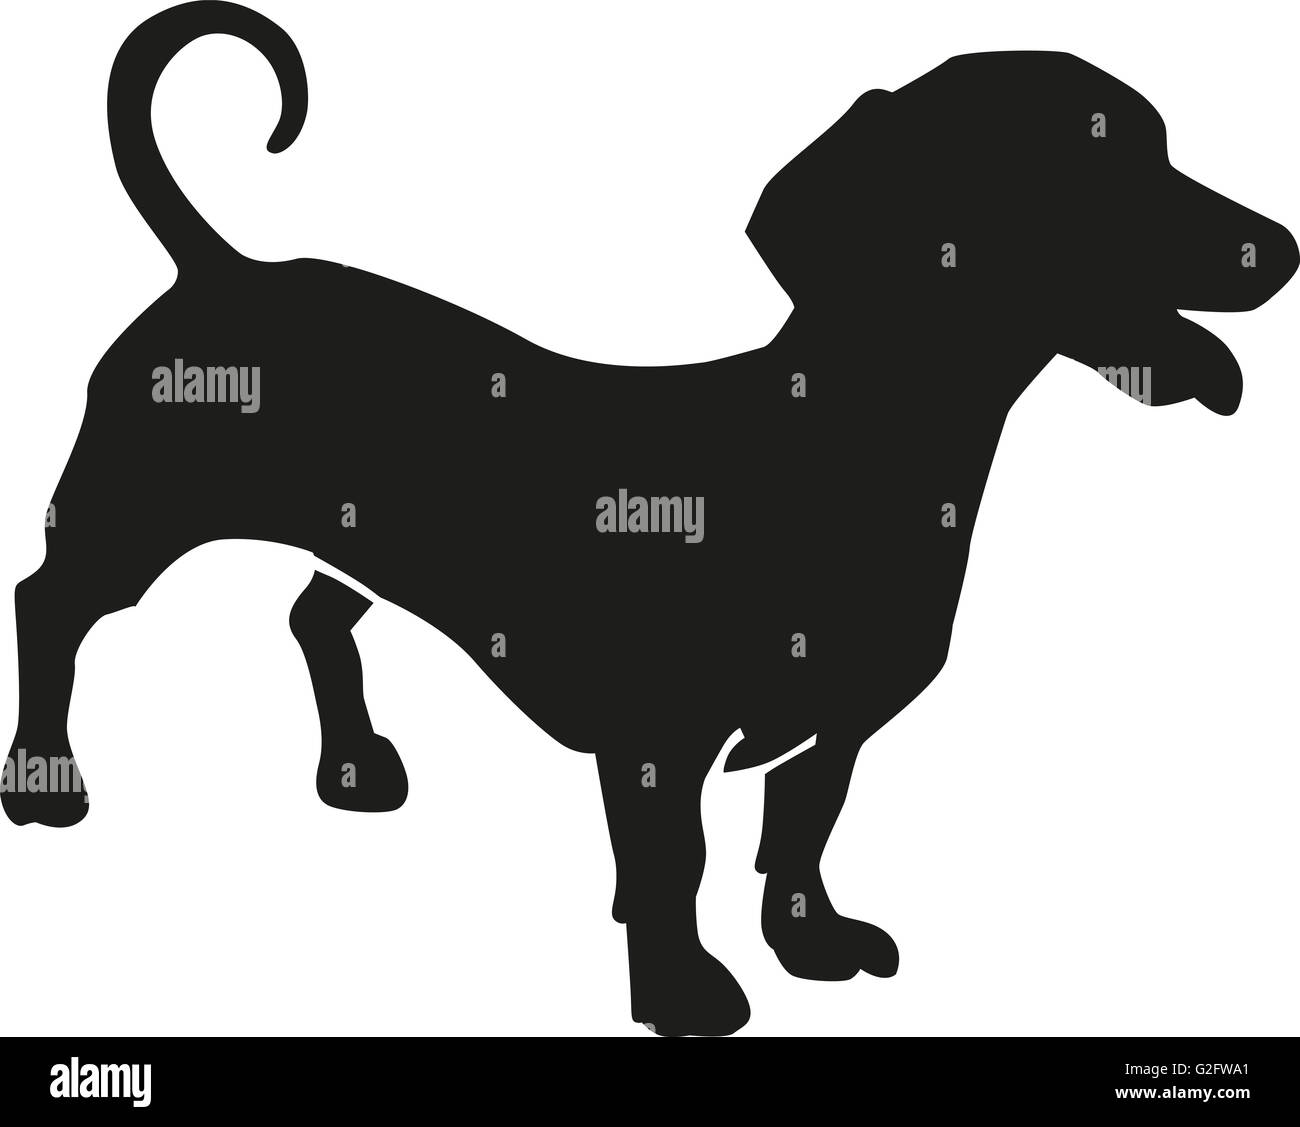 Dachshund sausage dog silhouette Stock Photo